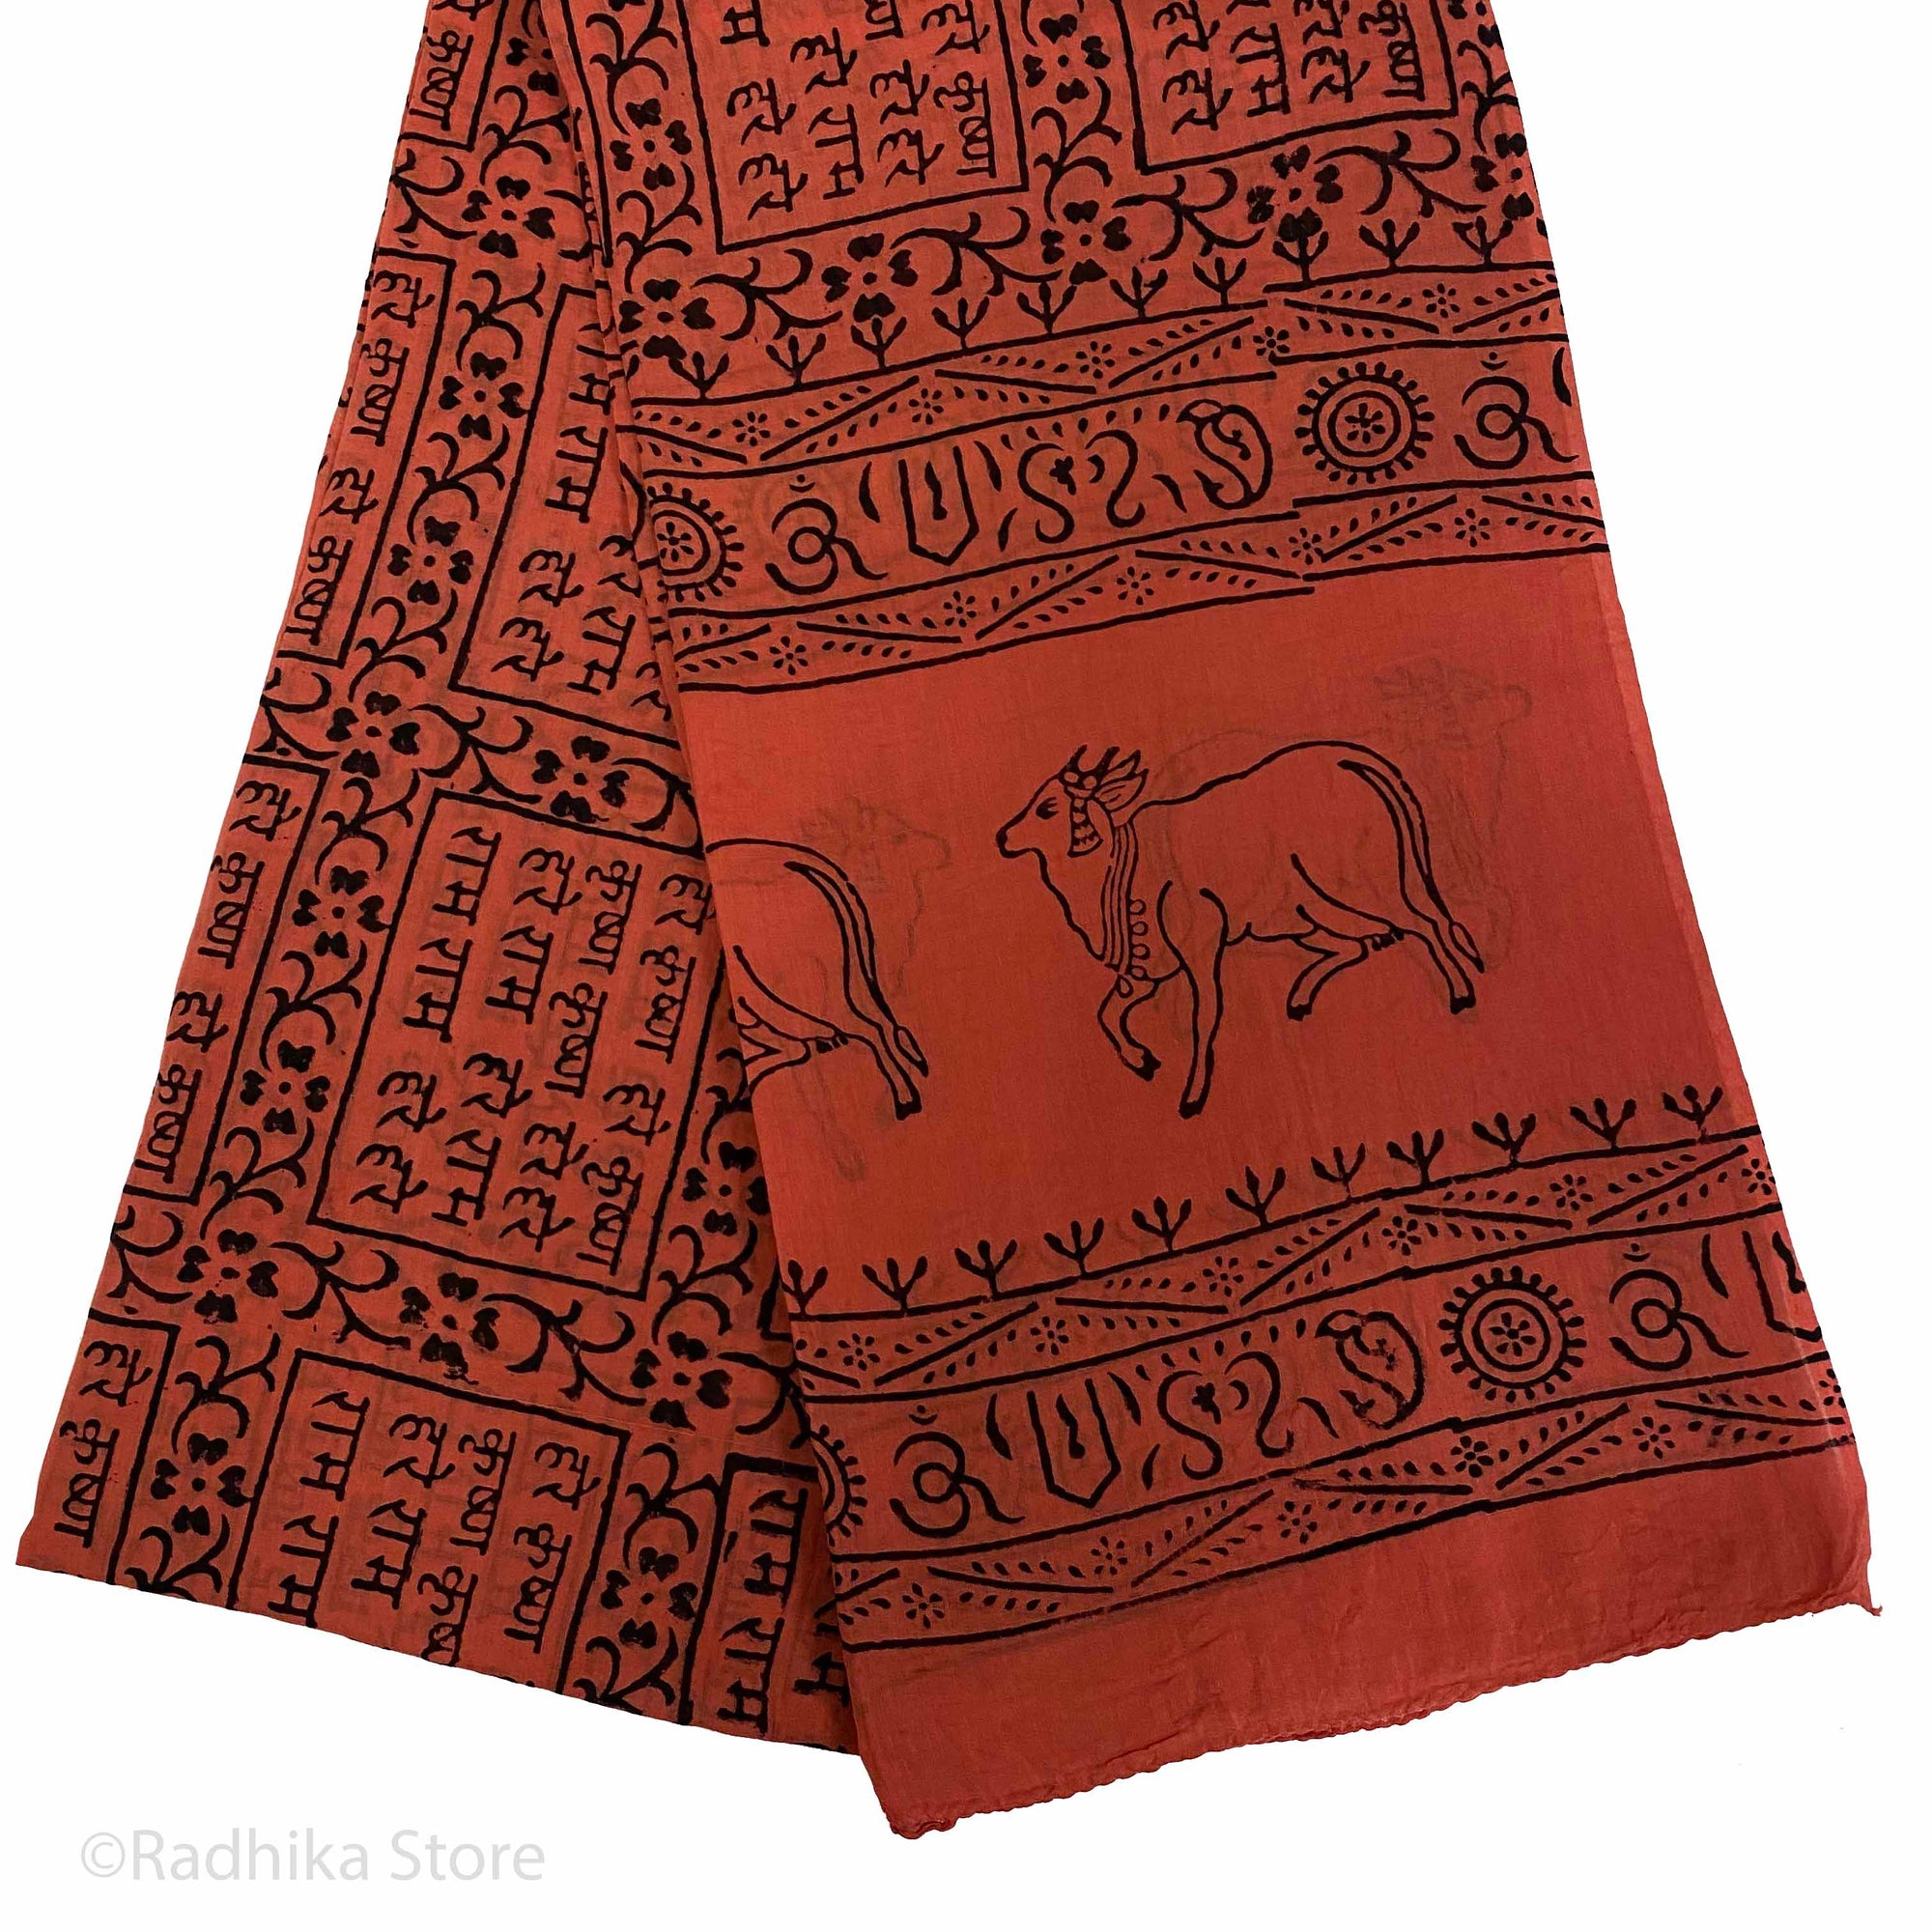 Coral (Orange Red) -  Maha Mantra Chadar - With Vrindavan Cows